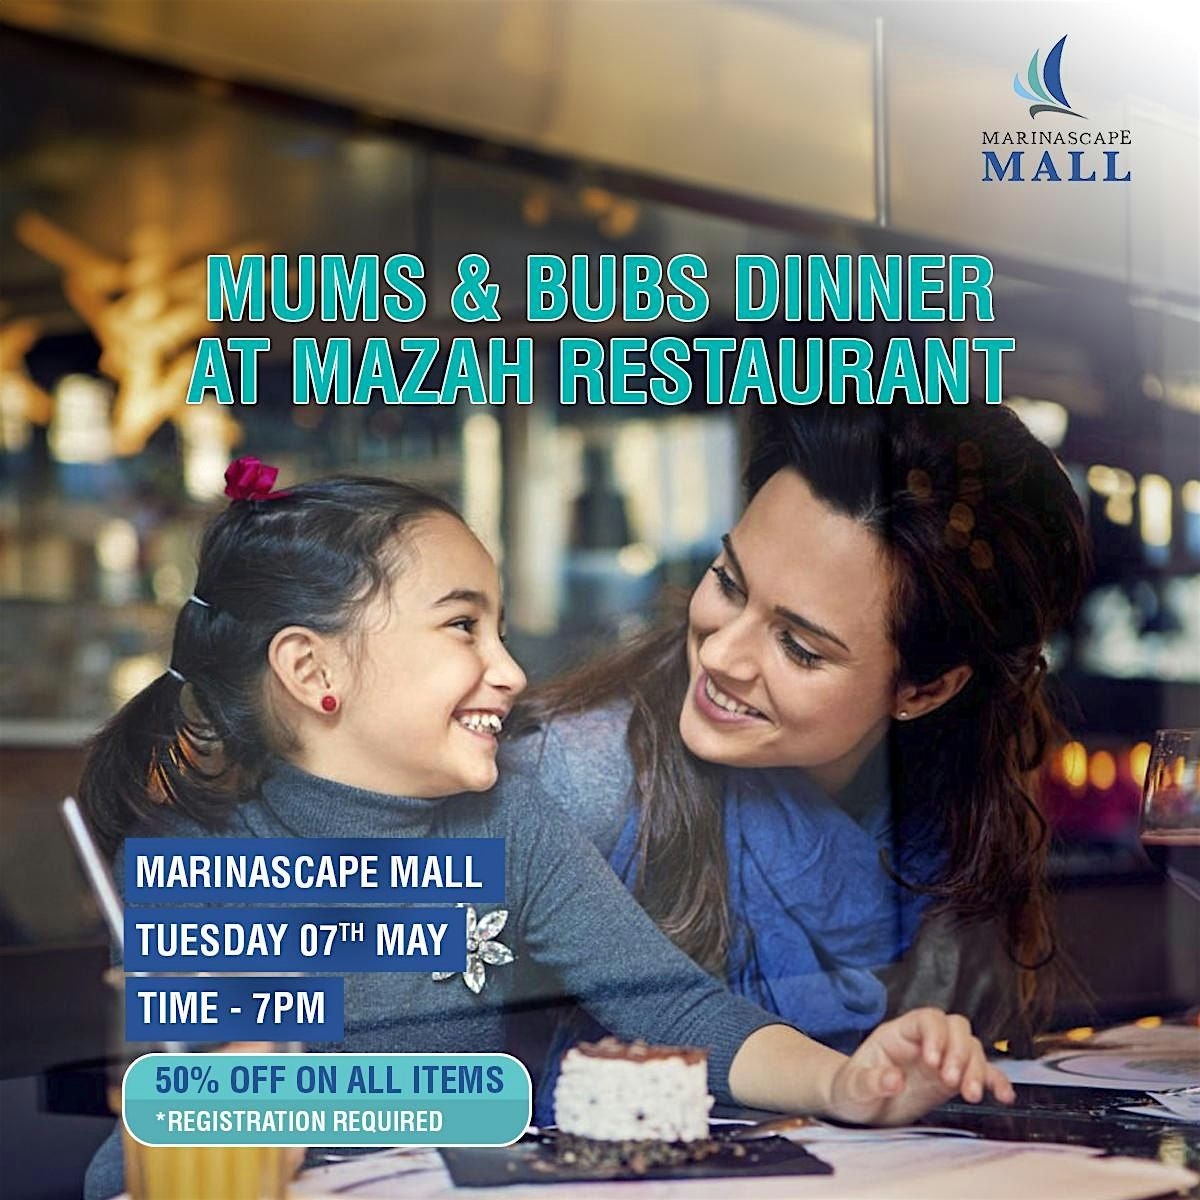 Mums and Bubs Dinner at Mazah Restaurant: Flat 50% off